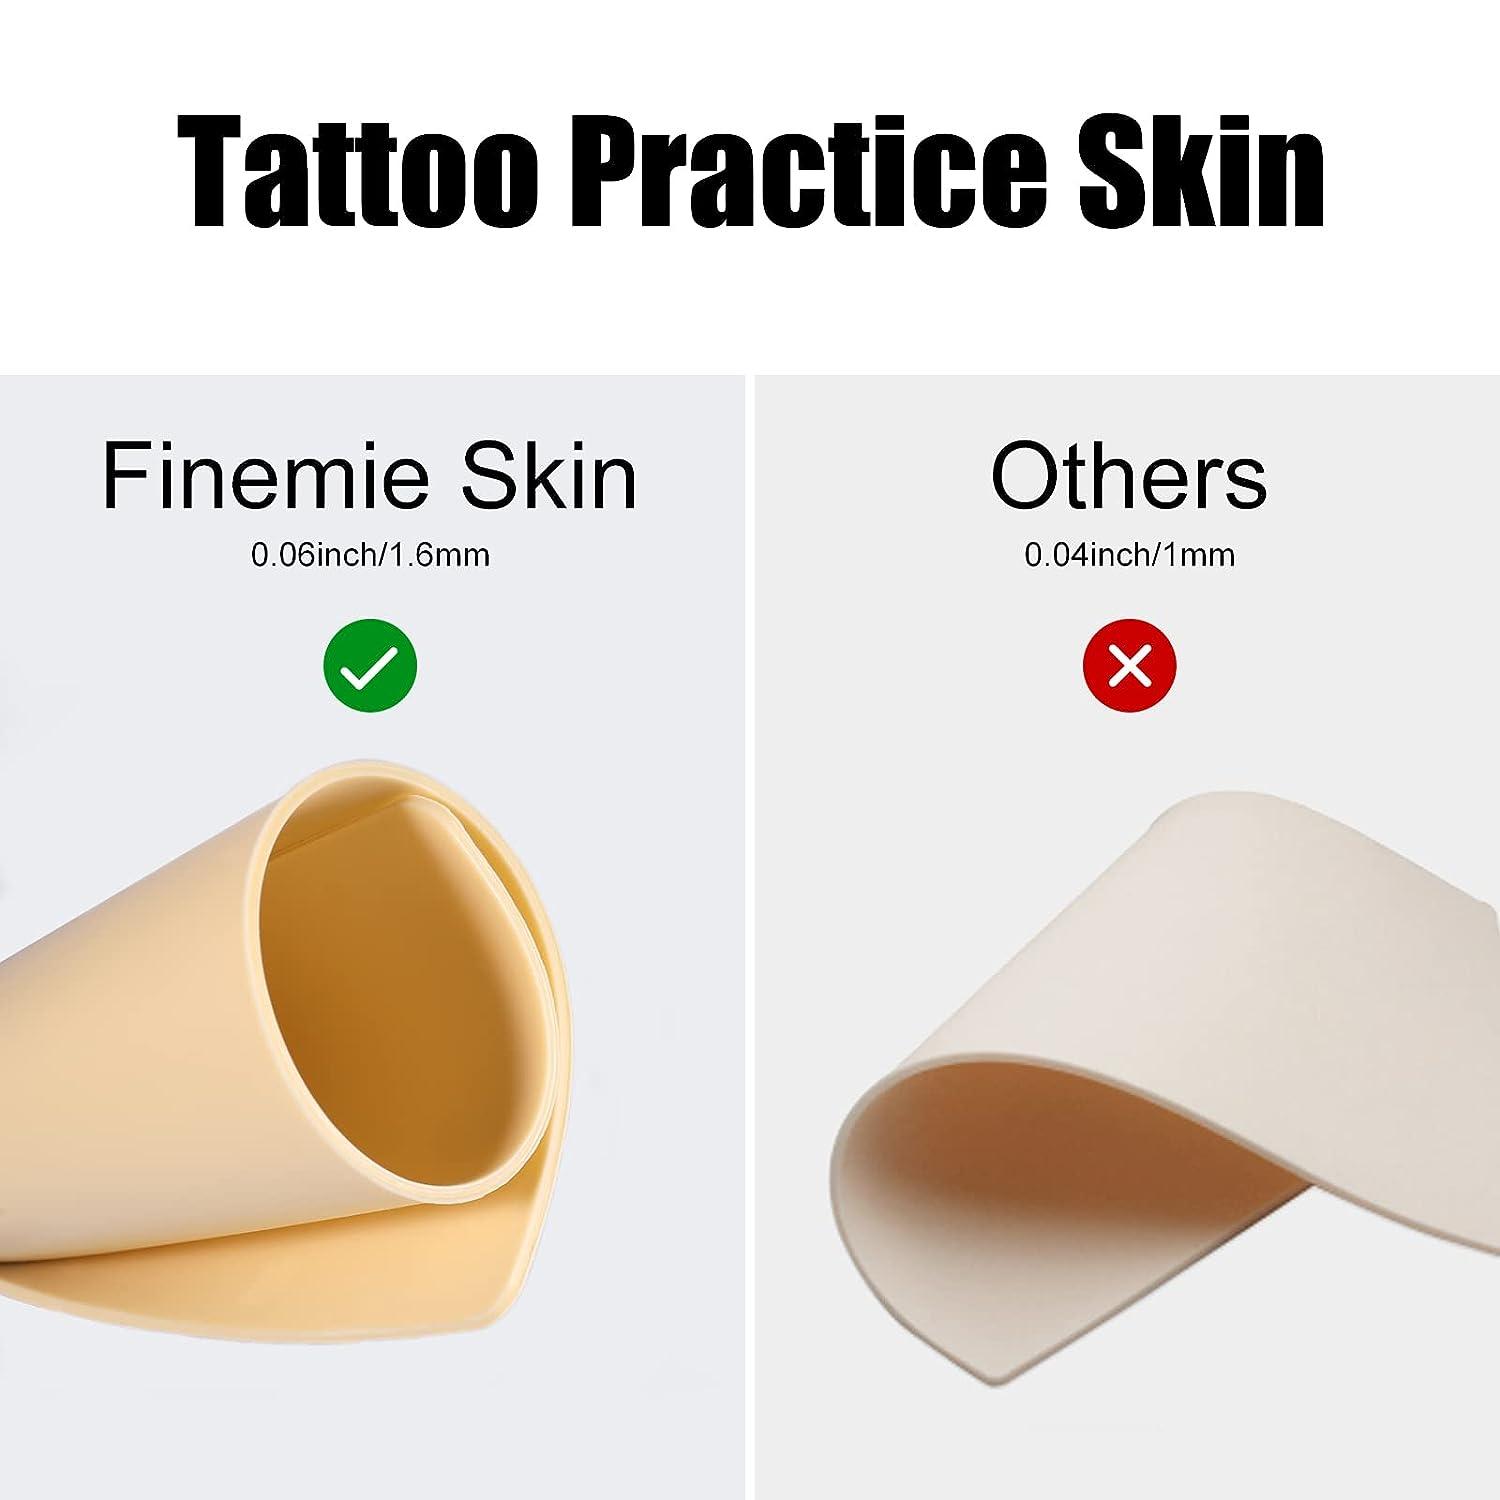 Tiny Tattoo Practice Skins - Brow Sister